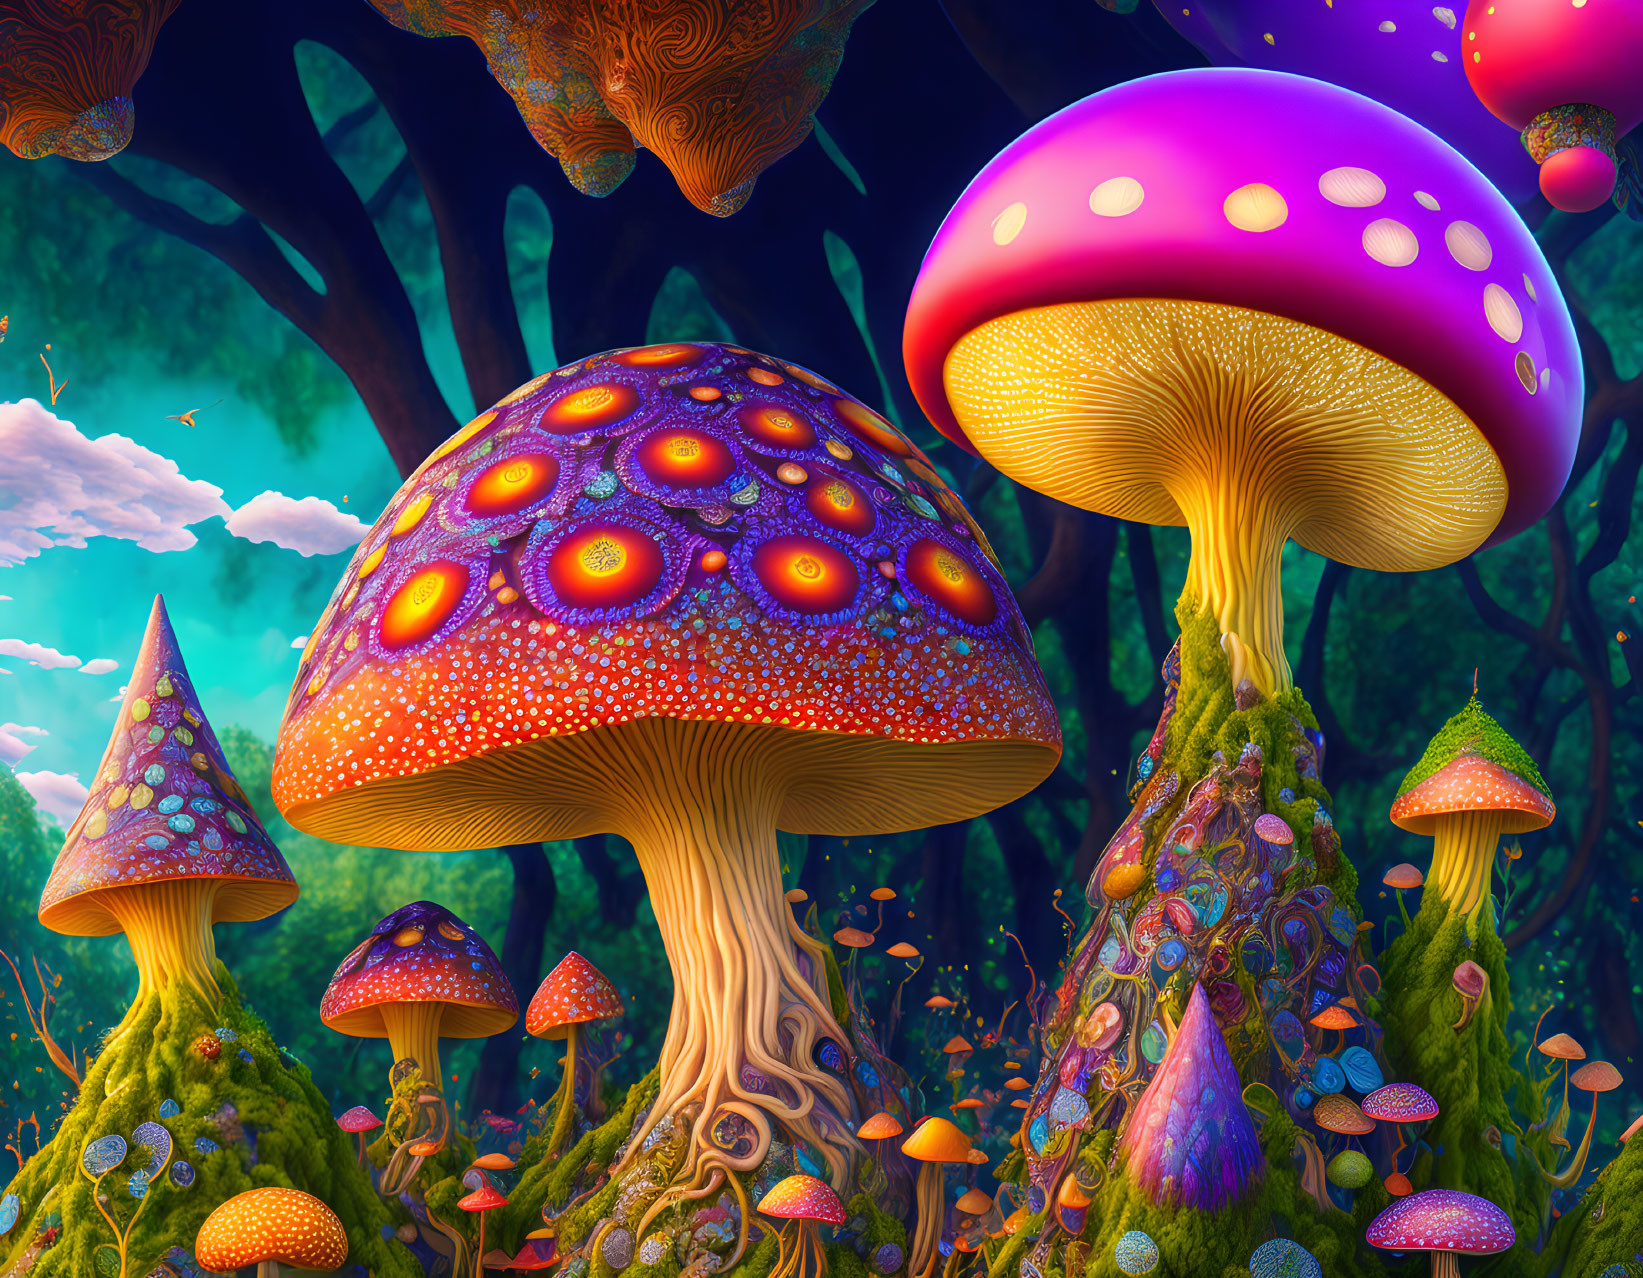 Colorful oversized mushrooms in lush twilight landscape